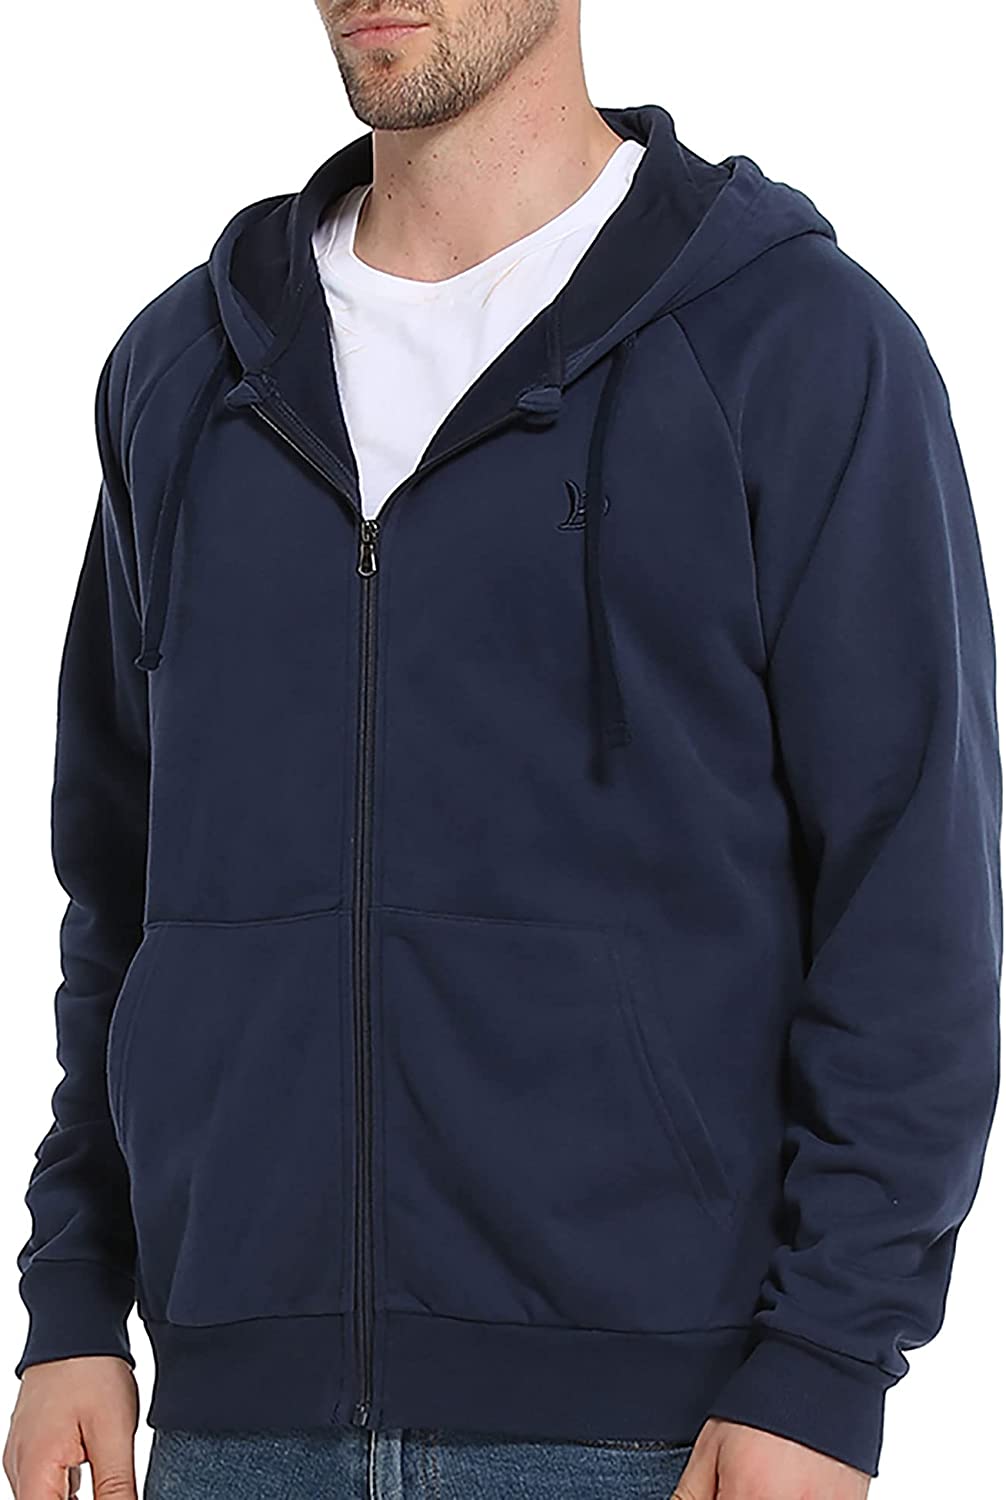 DONNAMITY Men's Fleece Sweatshirt Winter Casual Hooded Sweatshirt Long Sleeve Drawstring With Pockets 